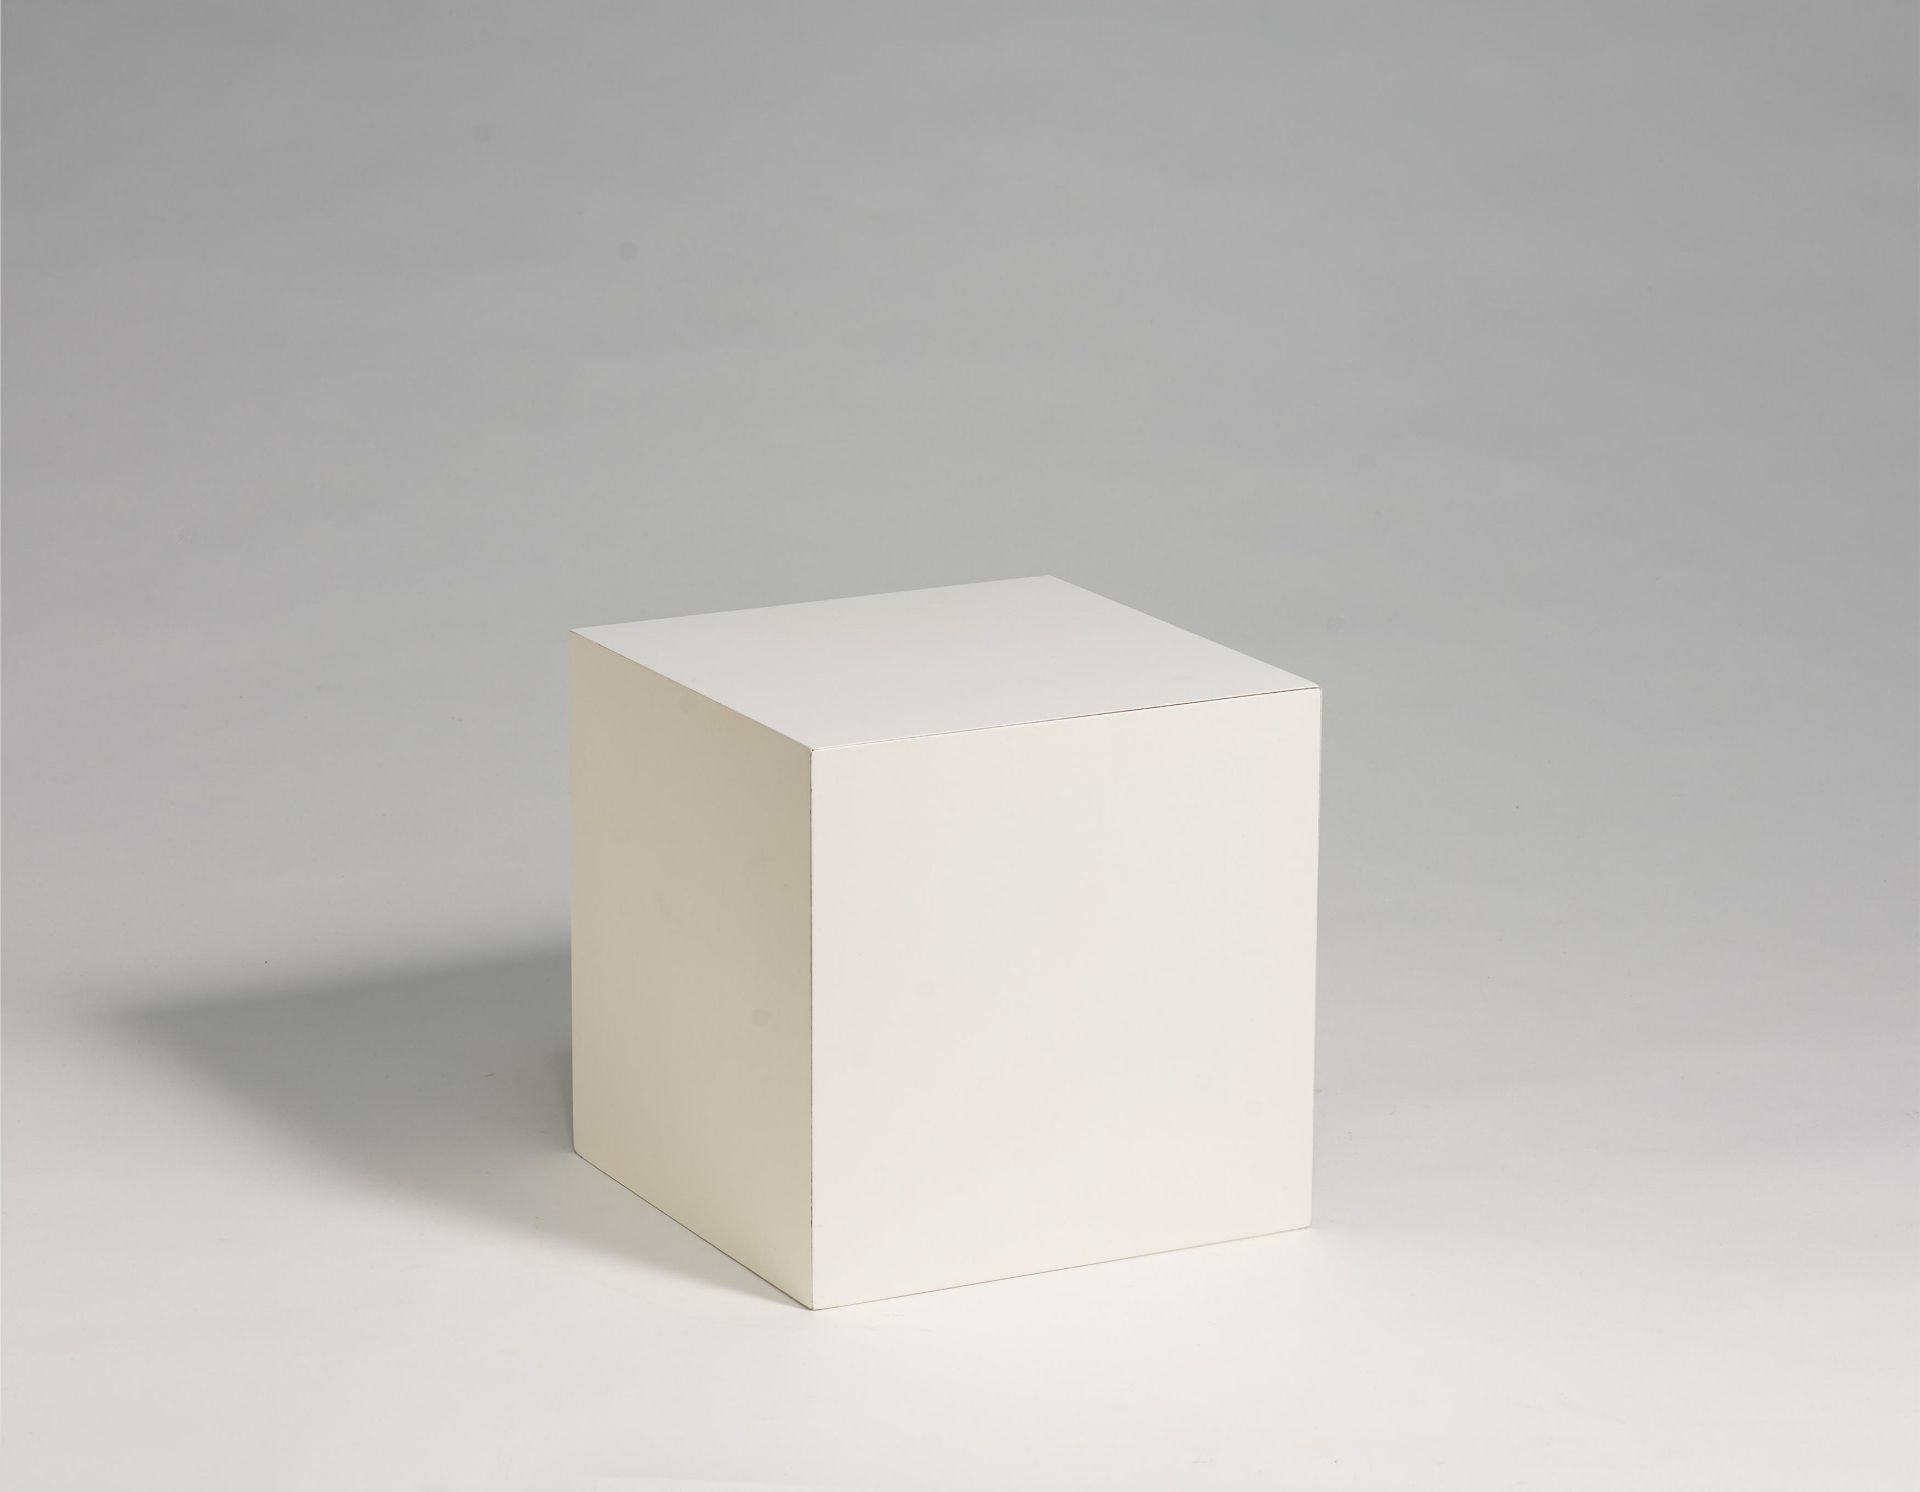 Gregor Schneider: White Black Box - Image 3 of 3